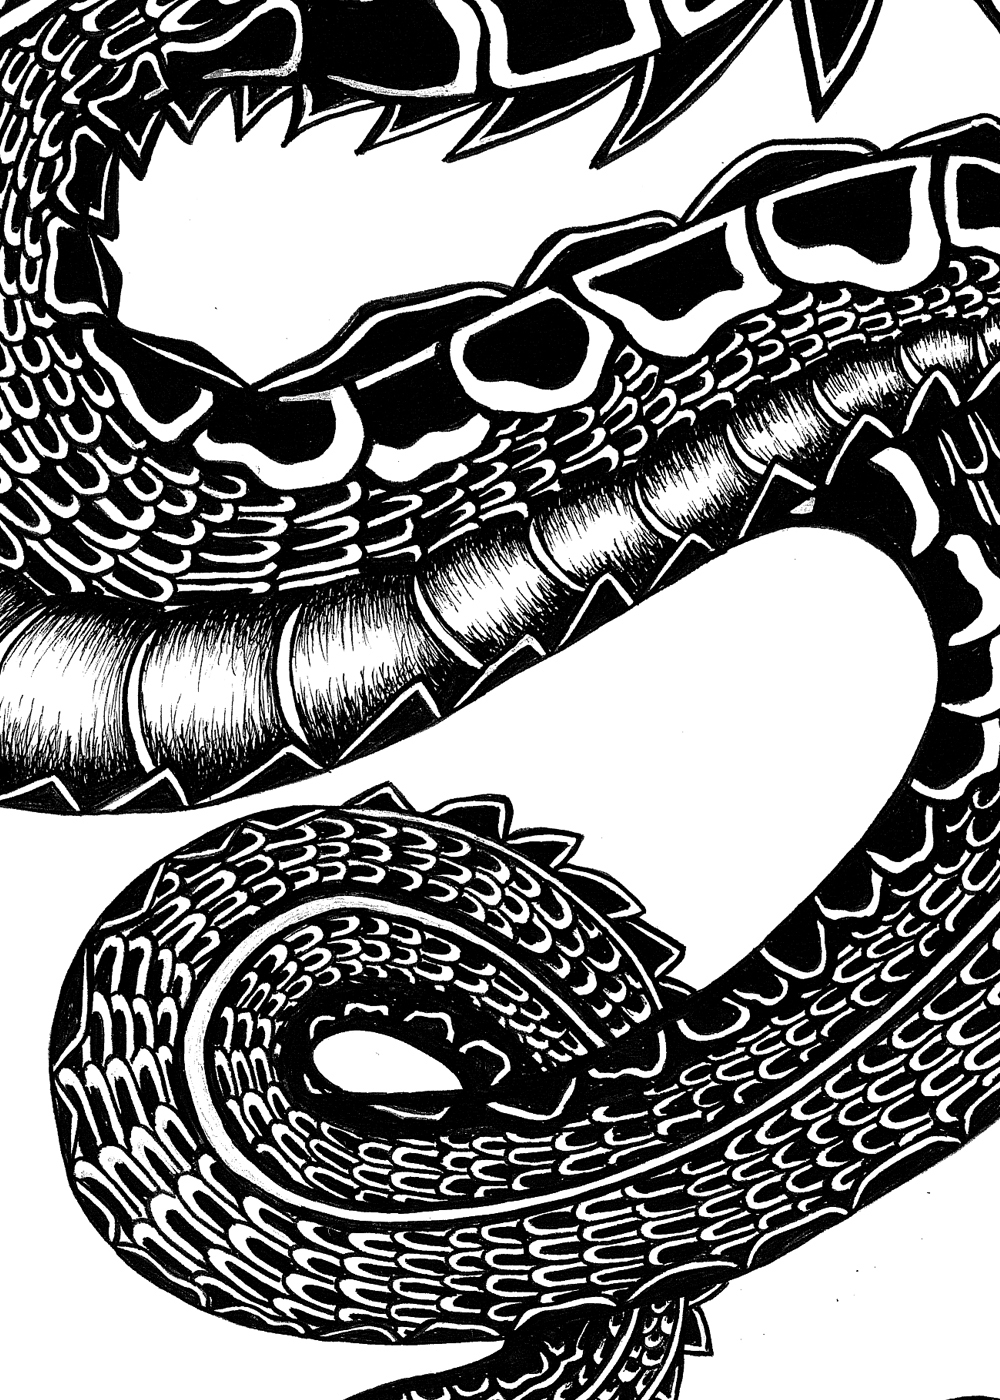 dragon ink blackink handdrawing floral detailart tshirt pattern Fashion  dragonart